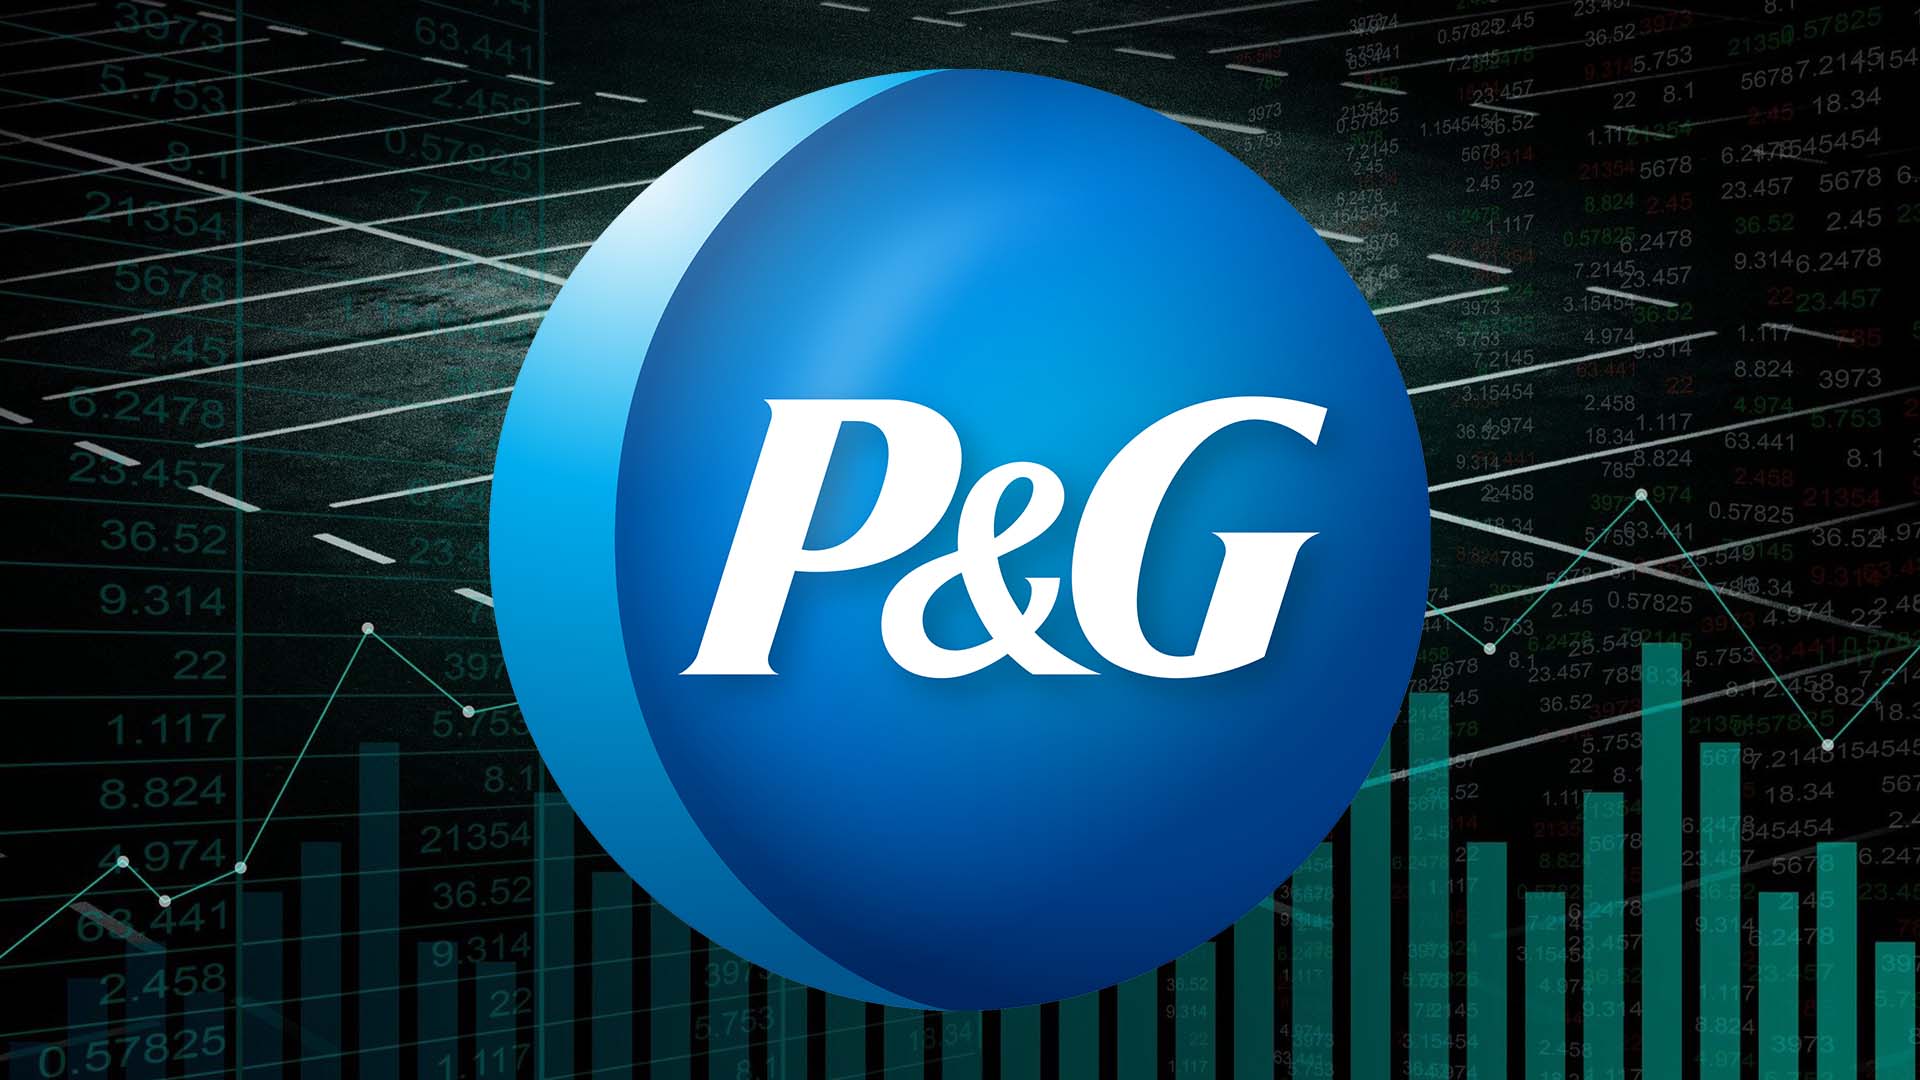 Procter & Gamble (P&G) Stock Price Looks Bullish on 9 November Despite